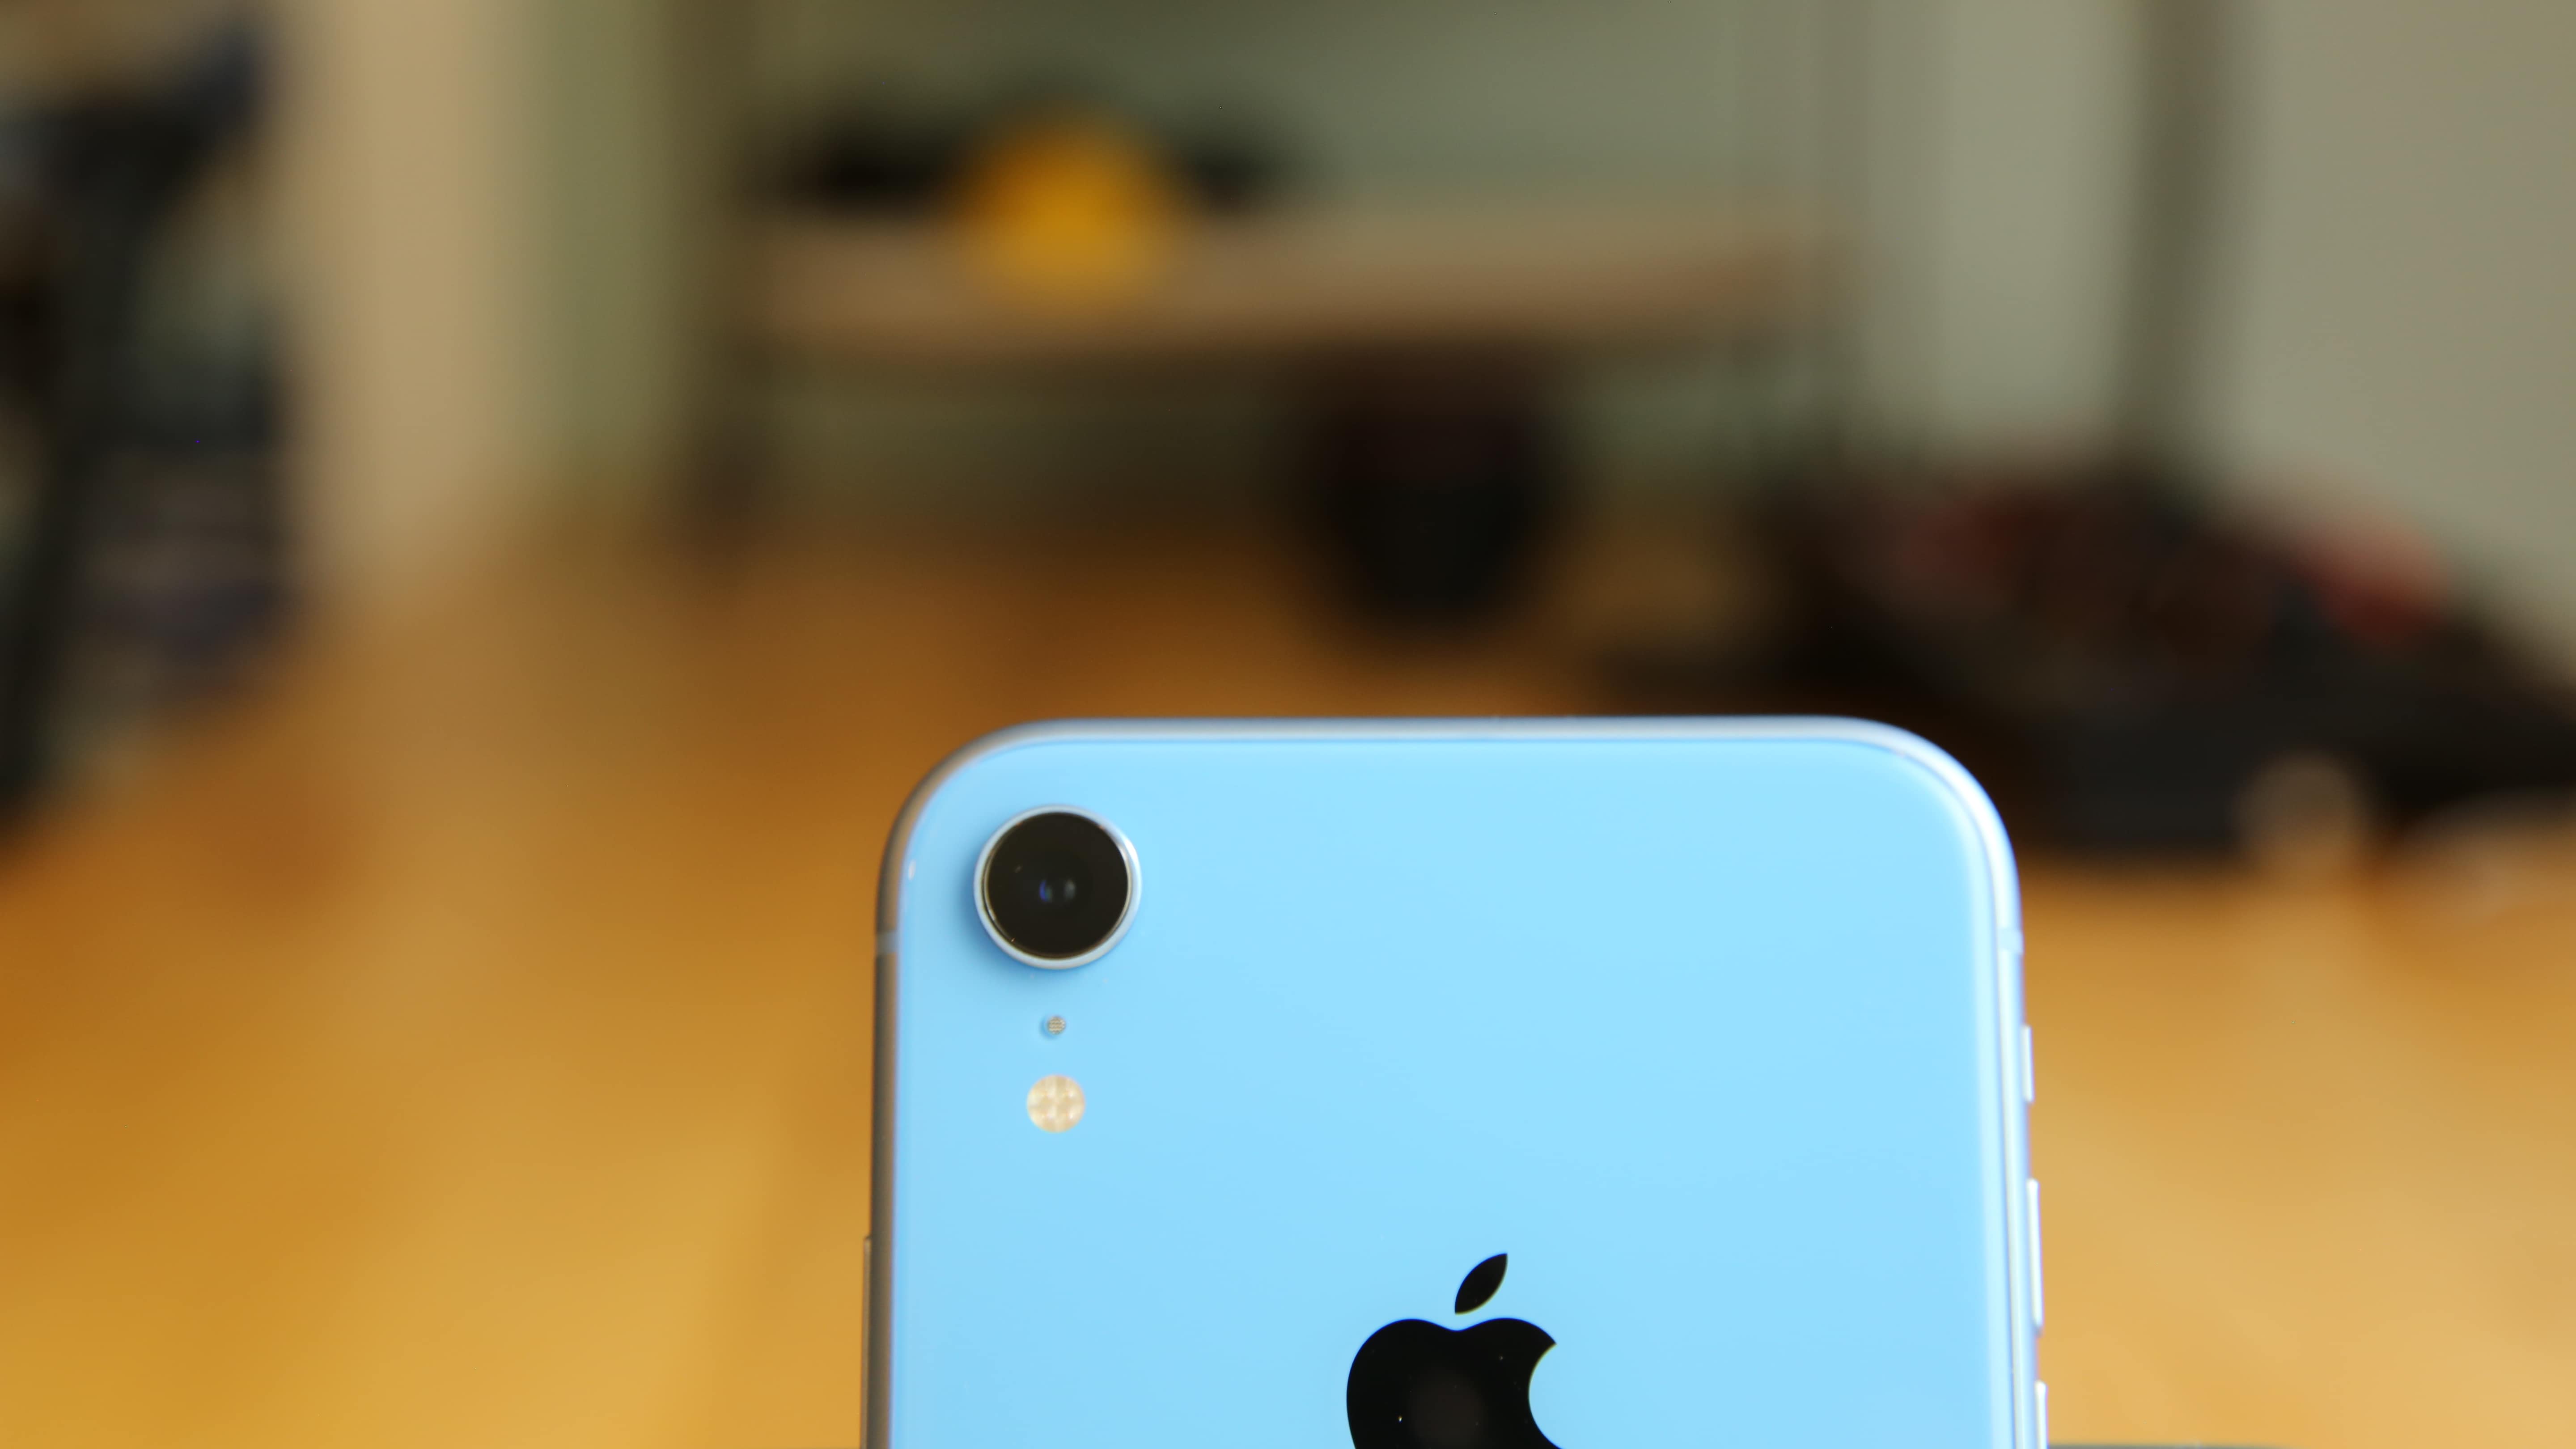 The iPhone XR packs a 12-megapixel single-lens camera.